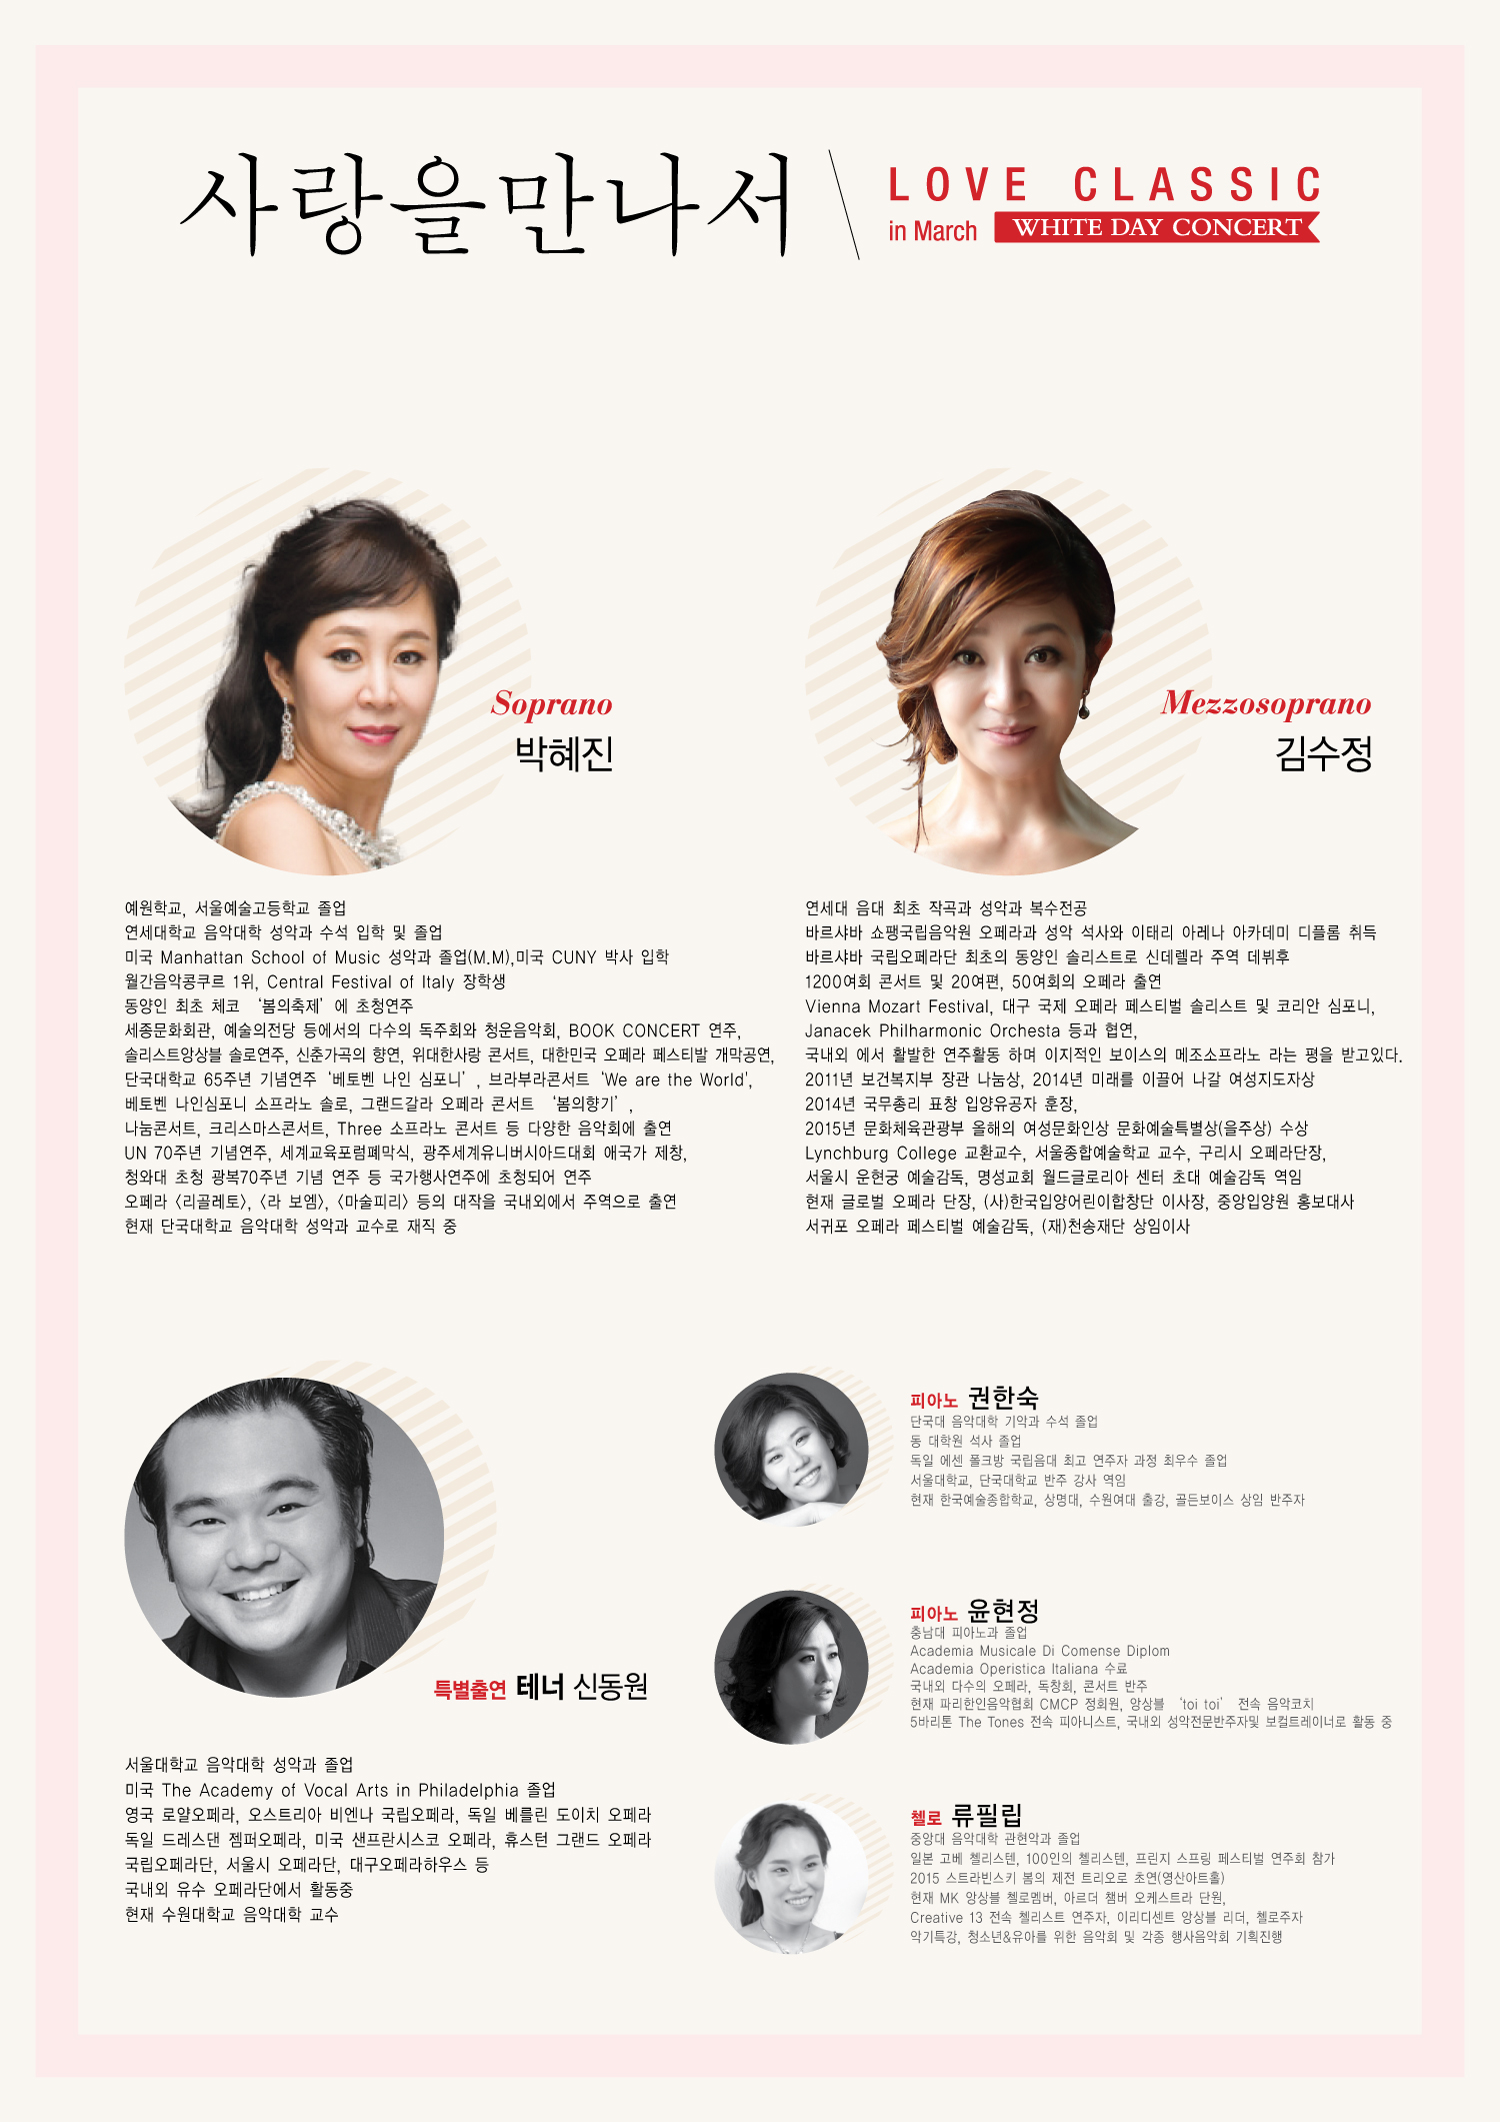 Love Classic in March 박혜진 과 김수정의 '사랑을 만나서' 이미지